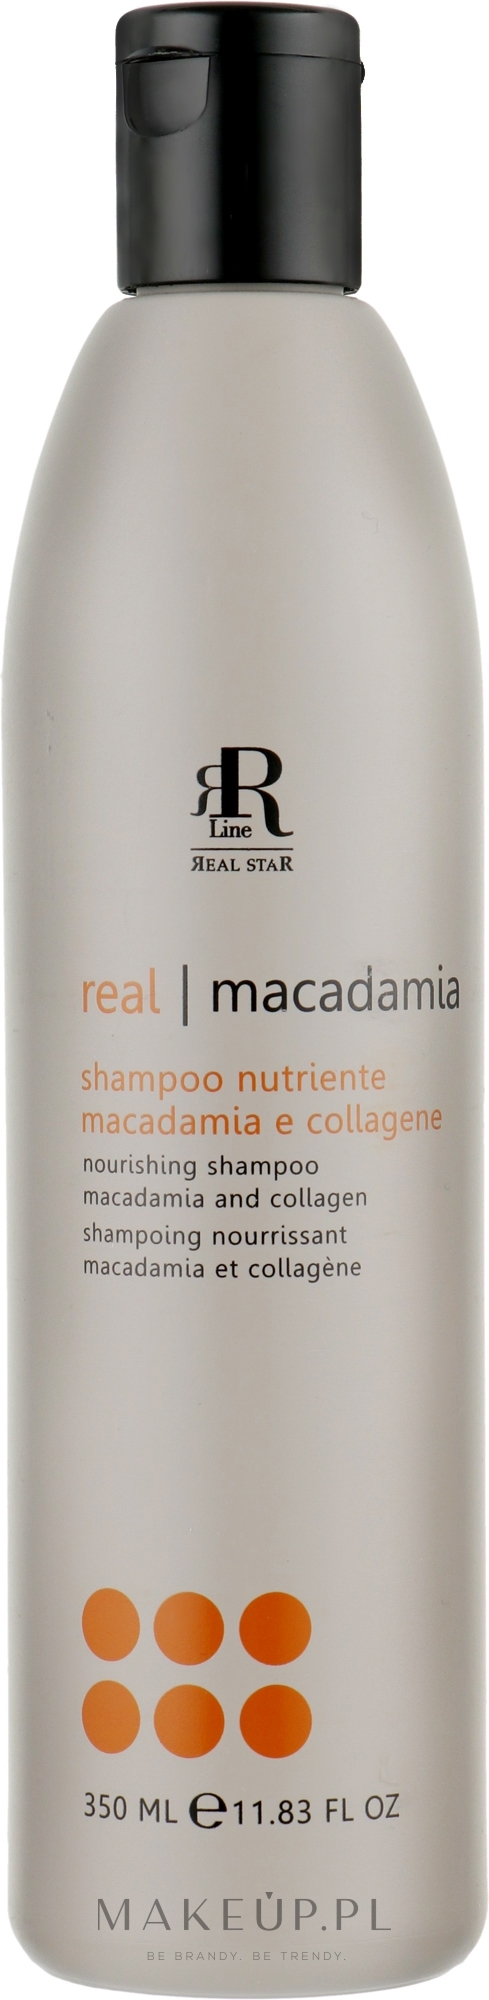 macadamia star szampon